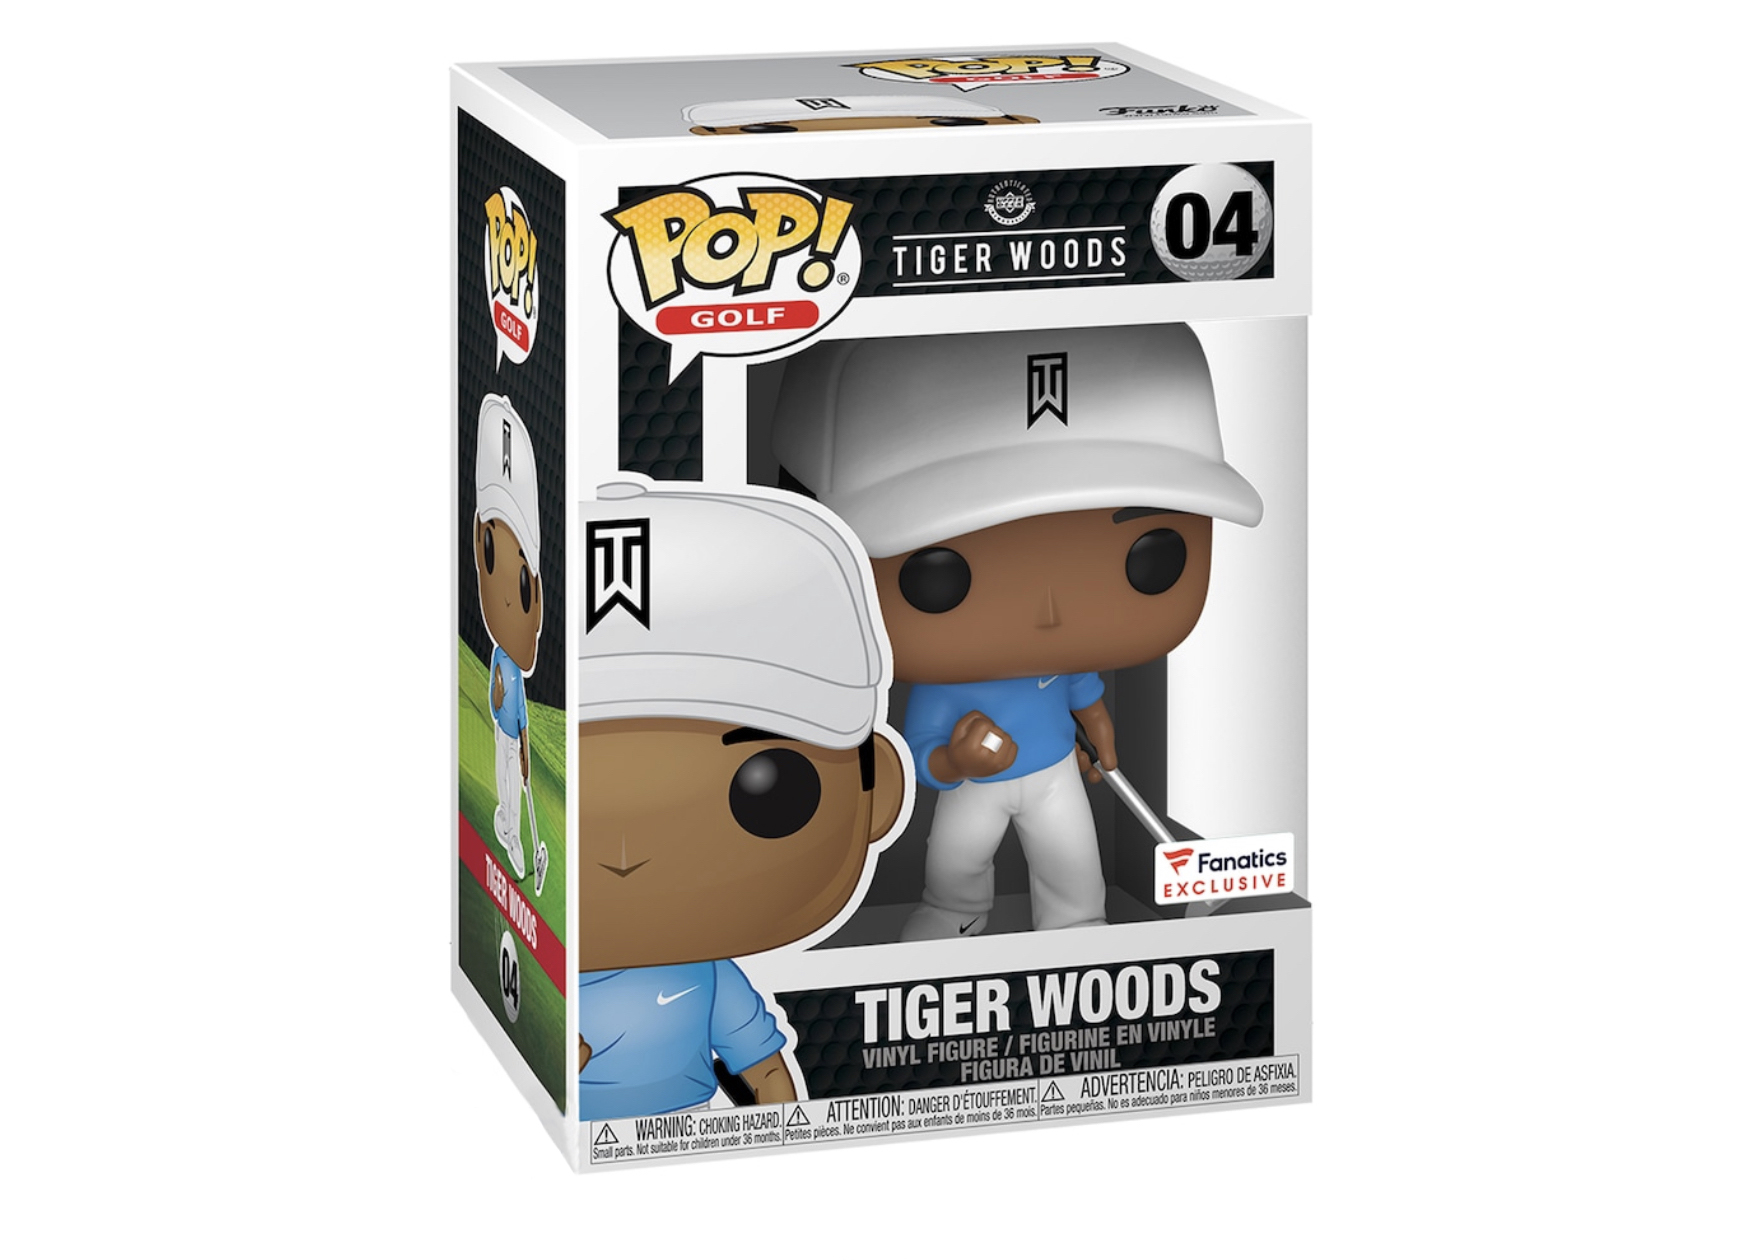 Funko Pop! Golf Tiger Woods Fanatics Exclusive Figure #04